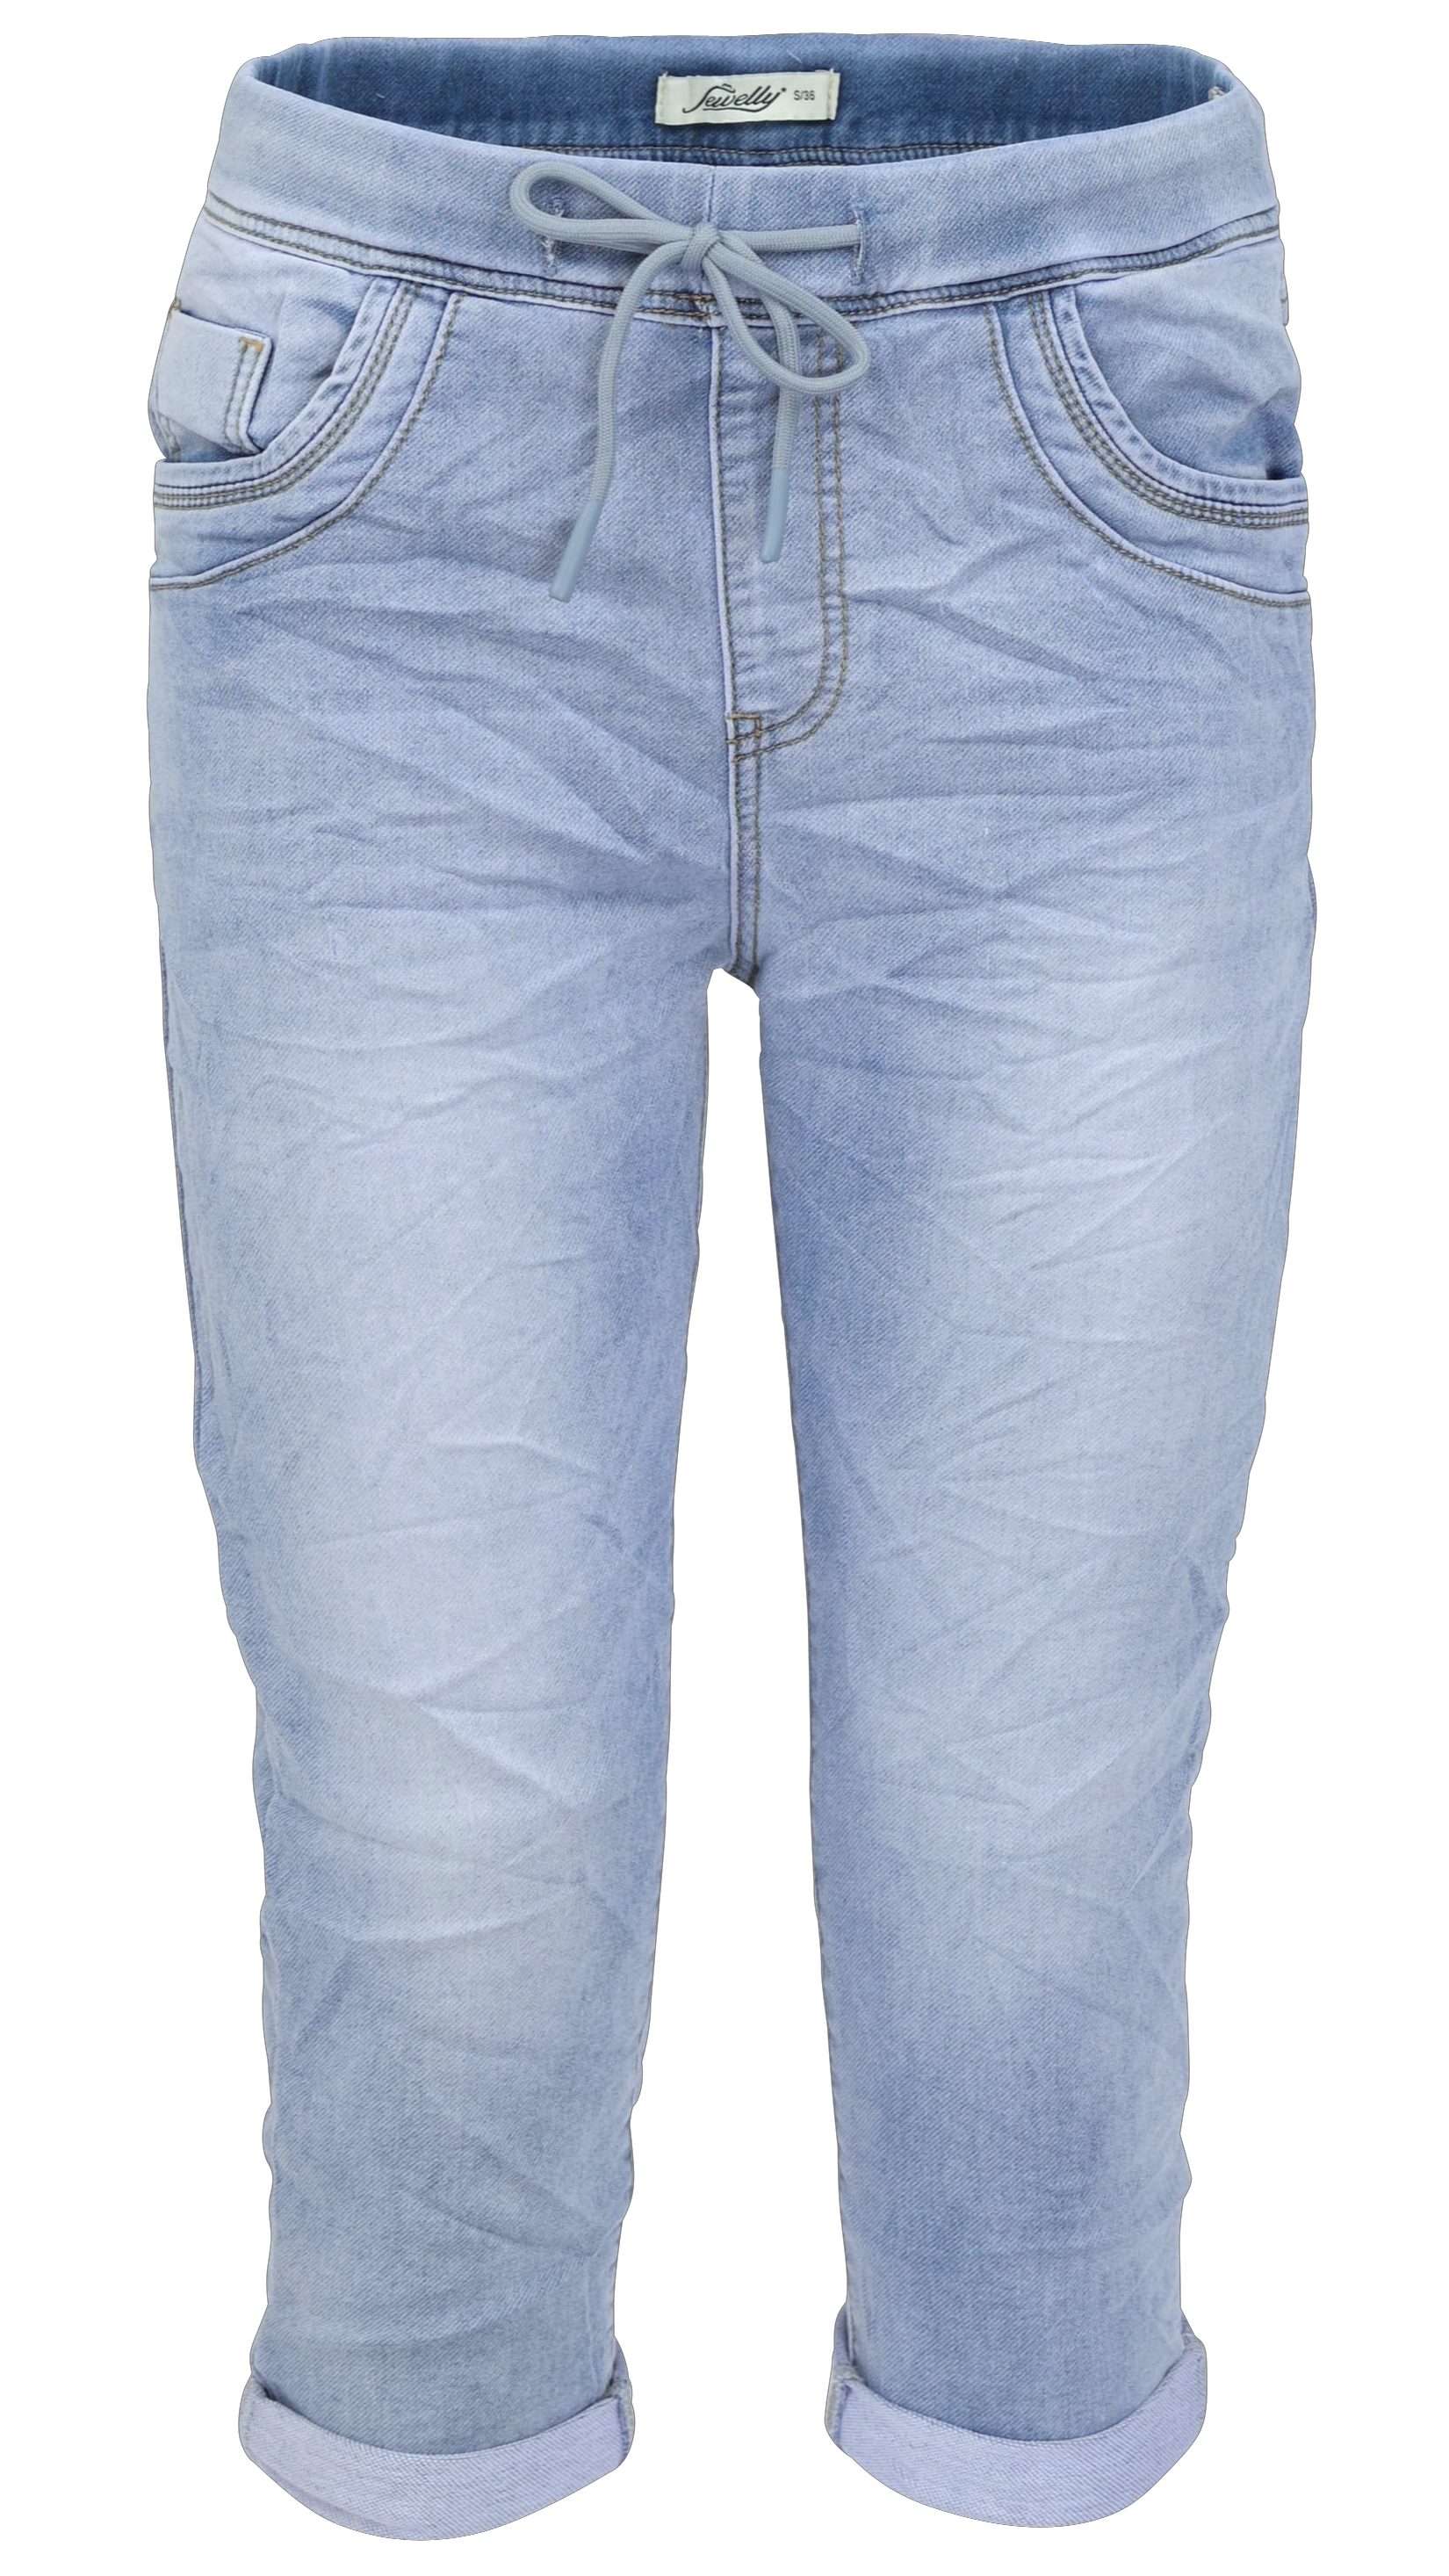 Baumwollqualität - Jewelly Jeans mit, Denim-Look im Jogg Bequeme Regular-fit-Jeans Pants Capri